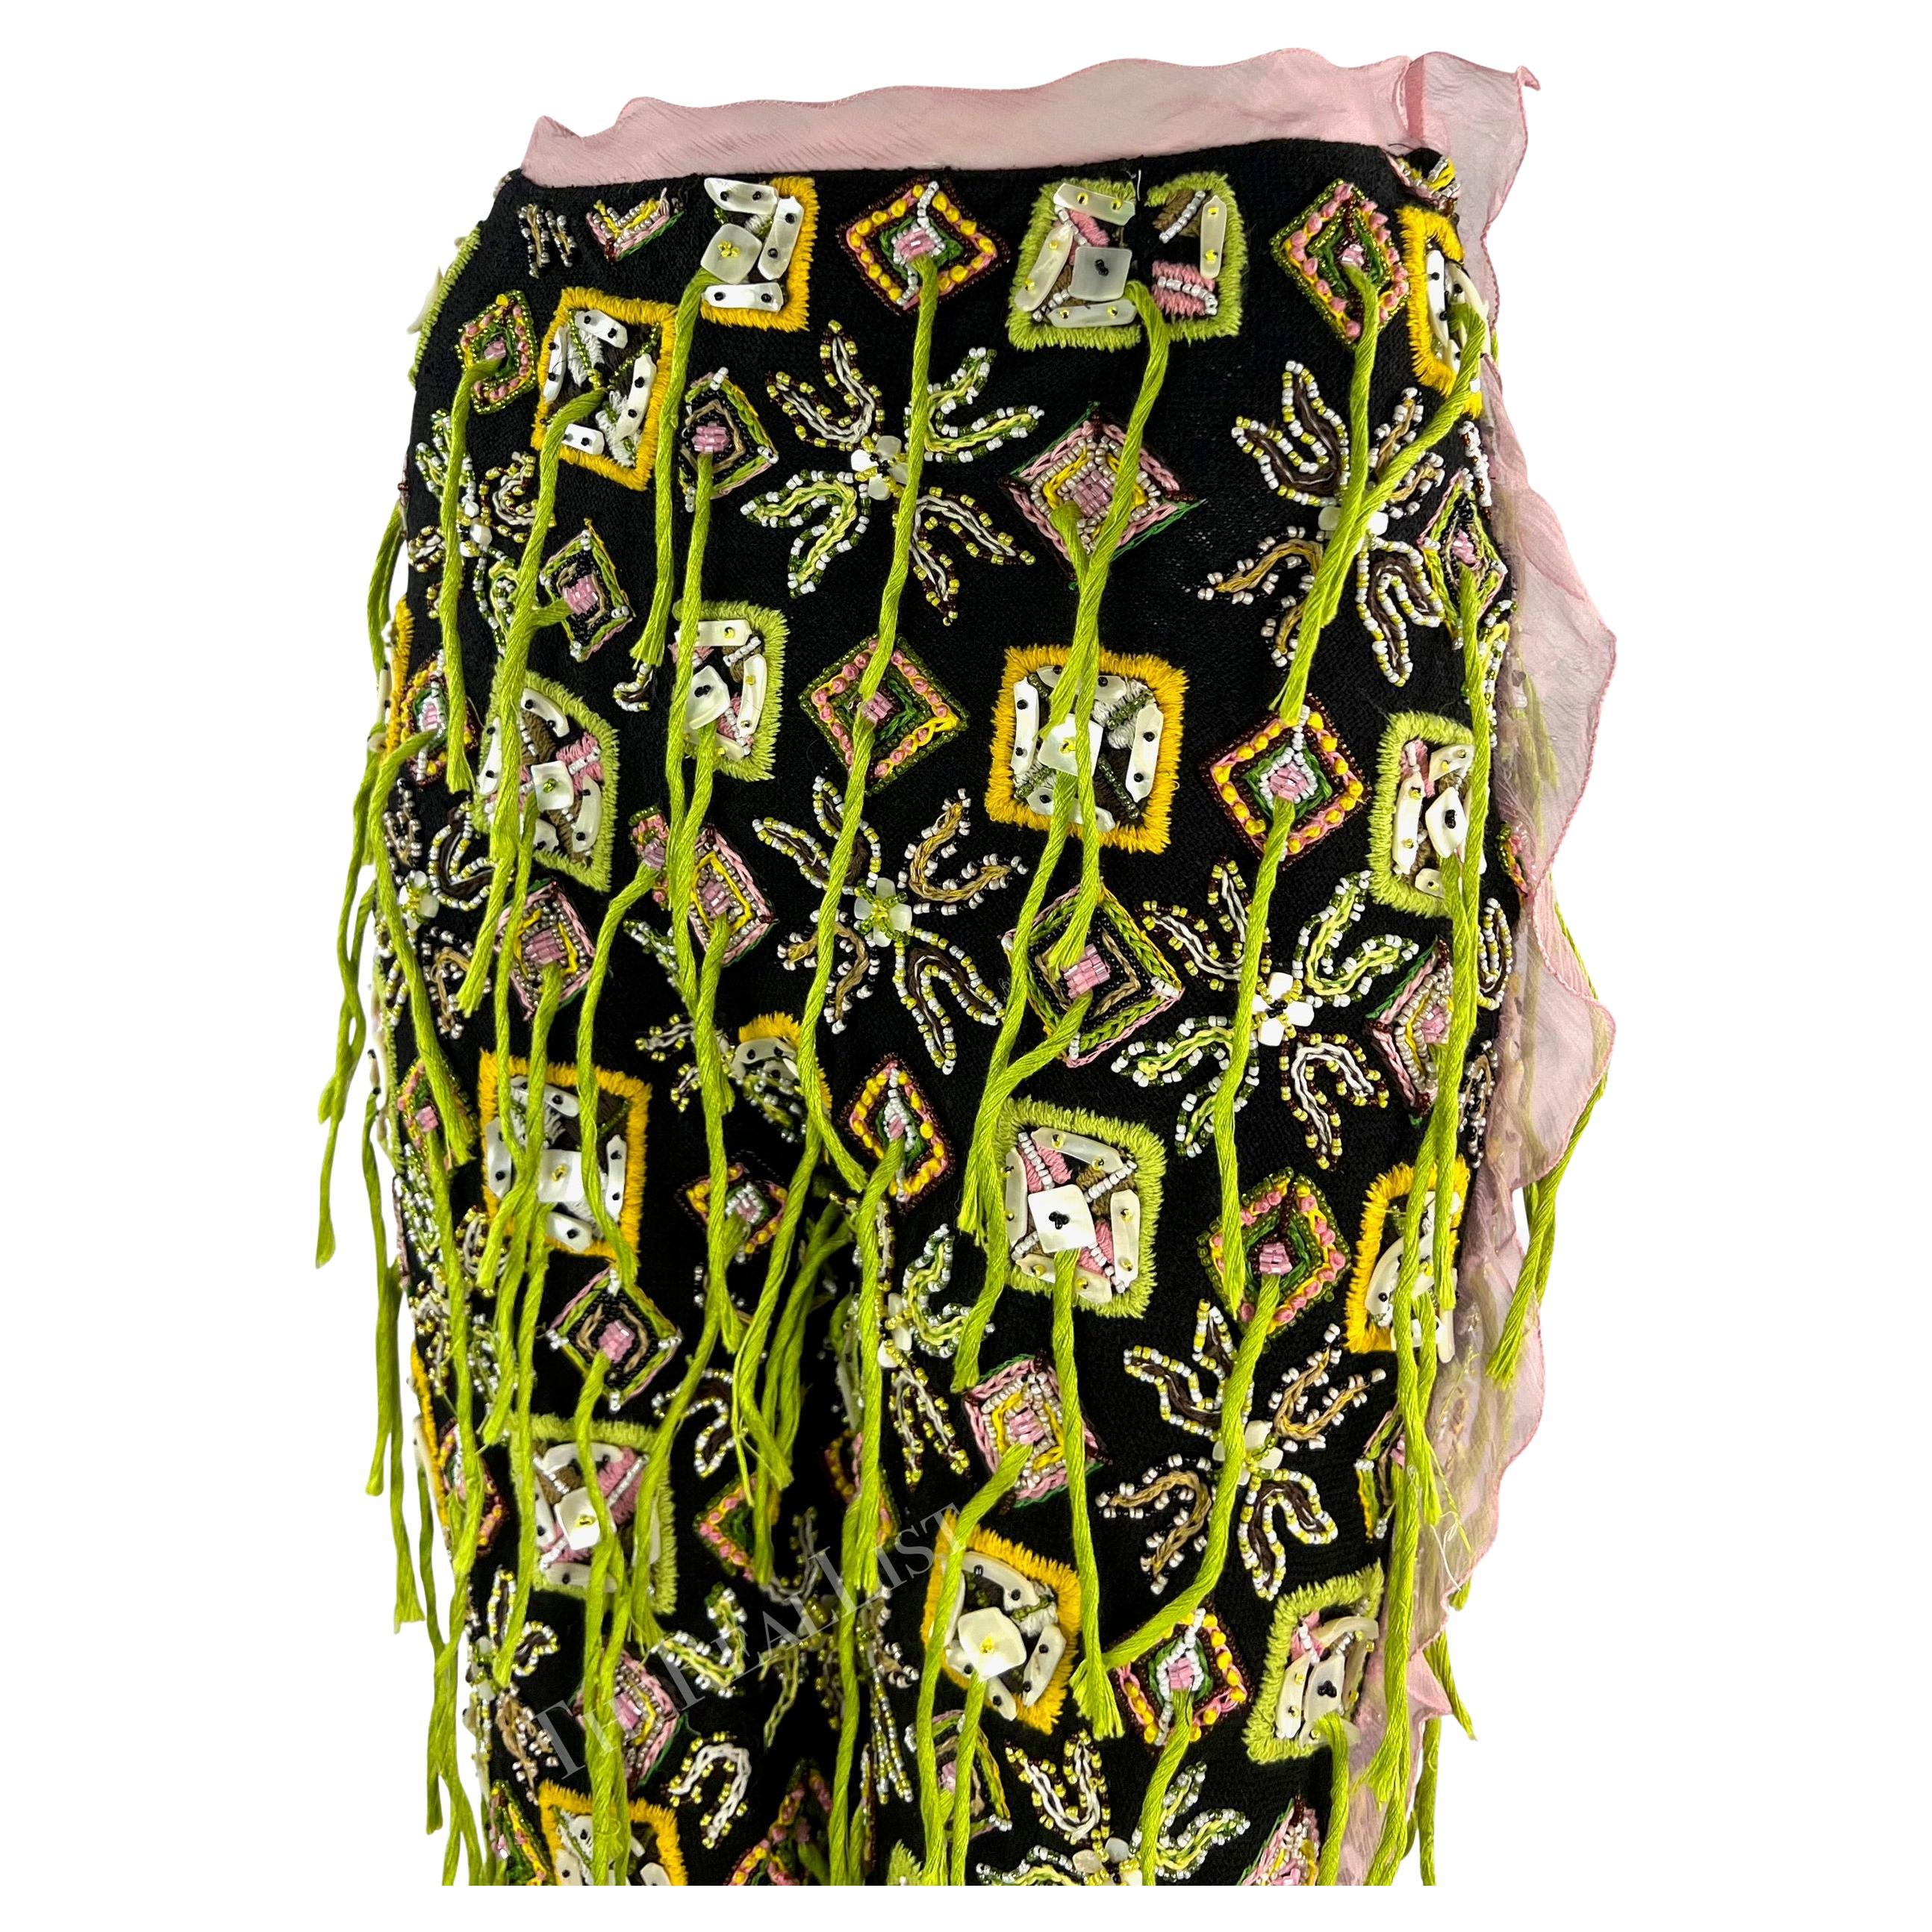 S/S 2000 Fendi by Karl Lagerfeld Beaded Embroidery Pink Chiffon Trim Pants 1